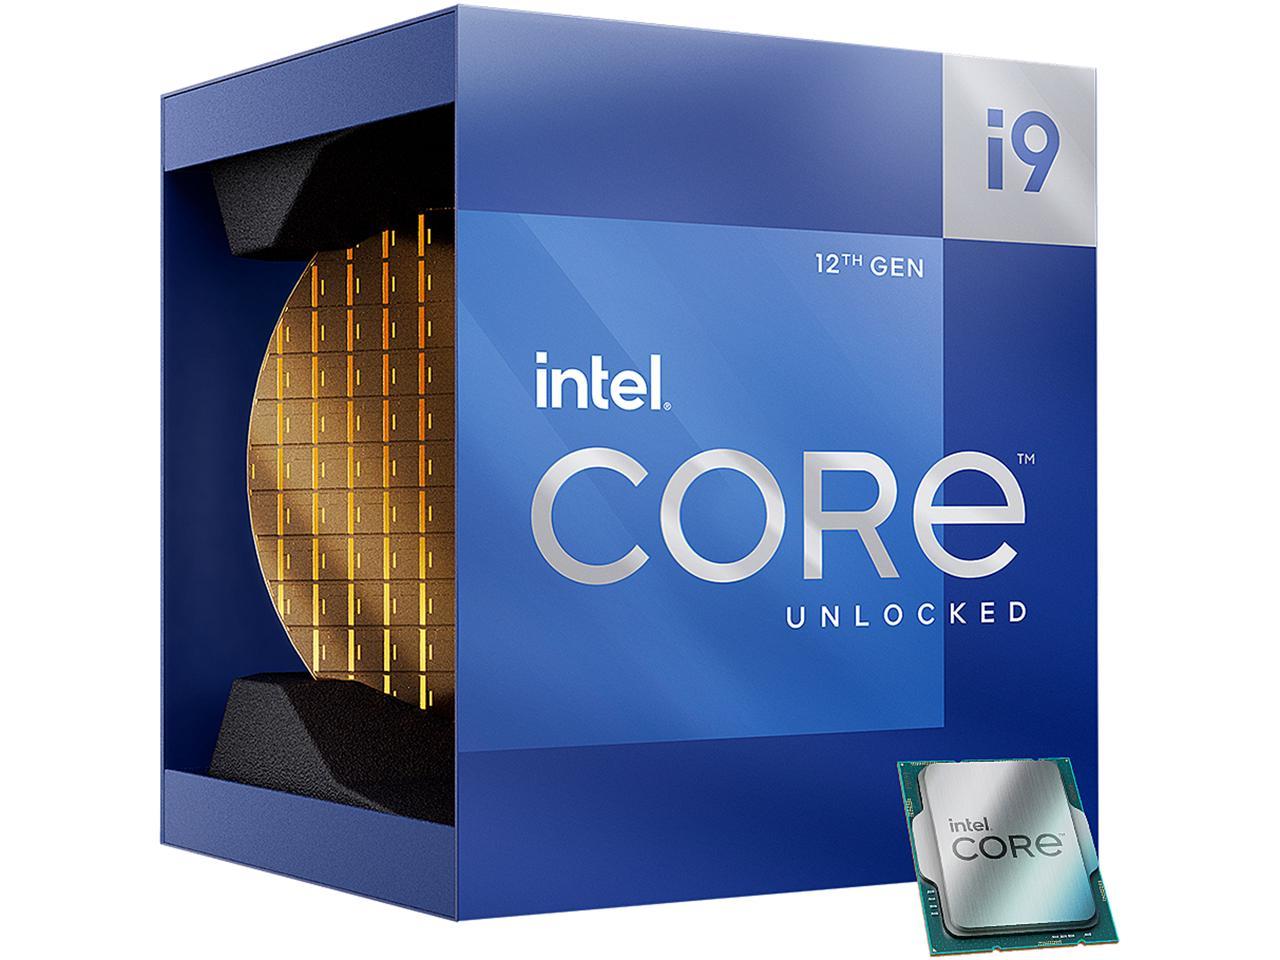 Intel Core i9-12900K Desktop Processor + Total War: Warhammer III Game (Digital Download) $345 + Free Shipping